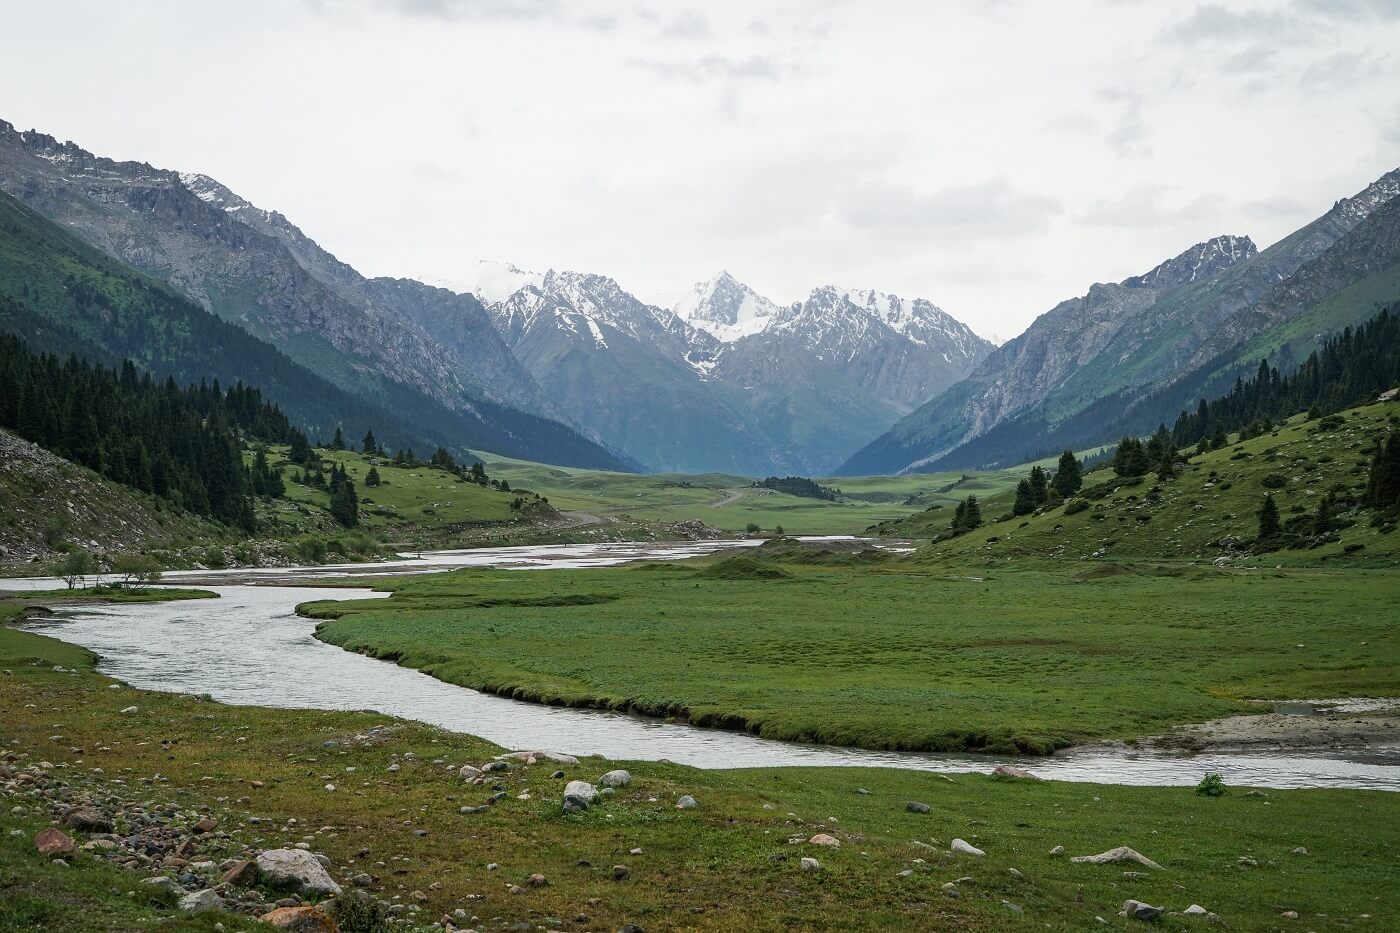 Jyrgalan Kyrgyzstan